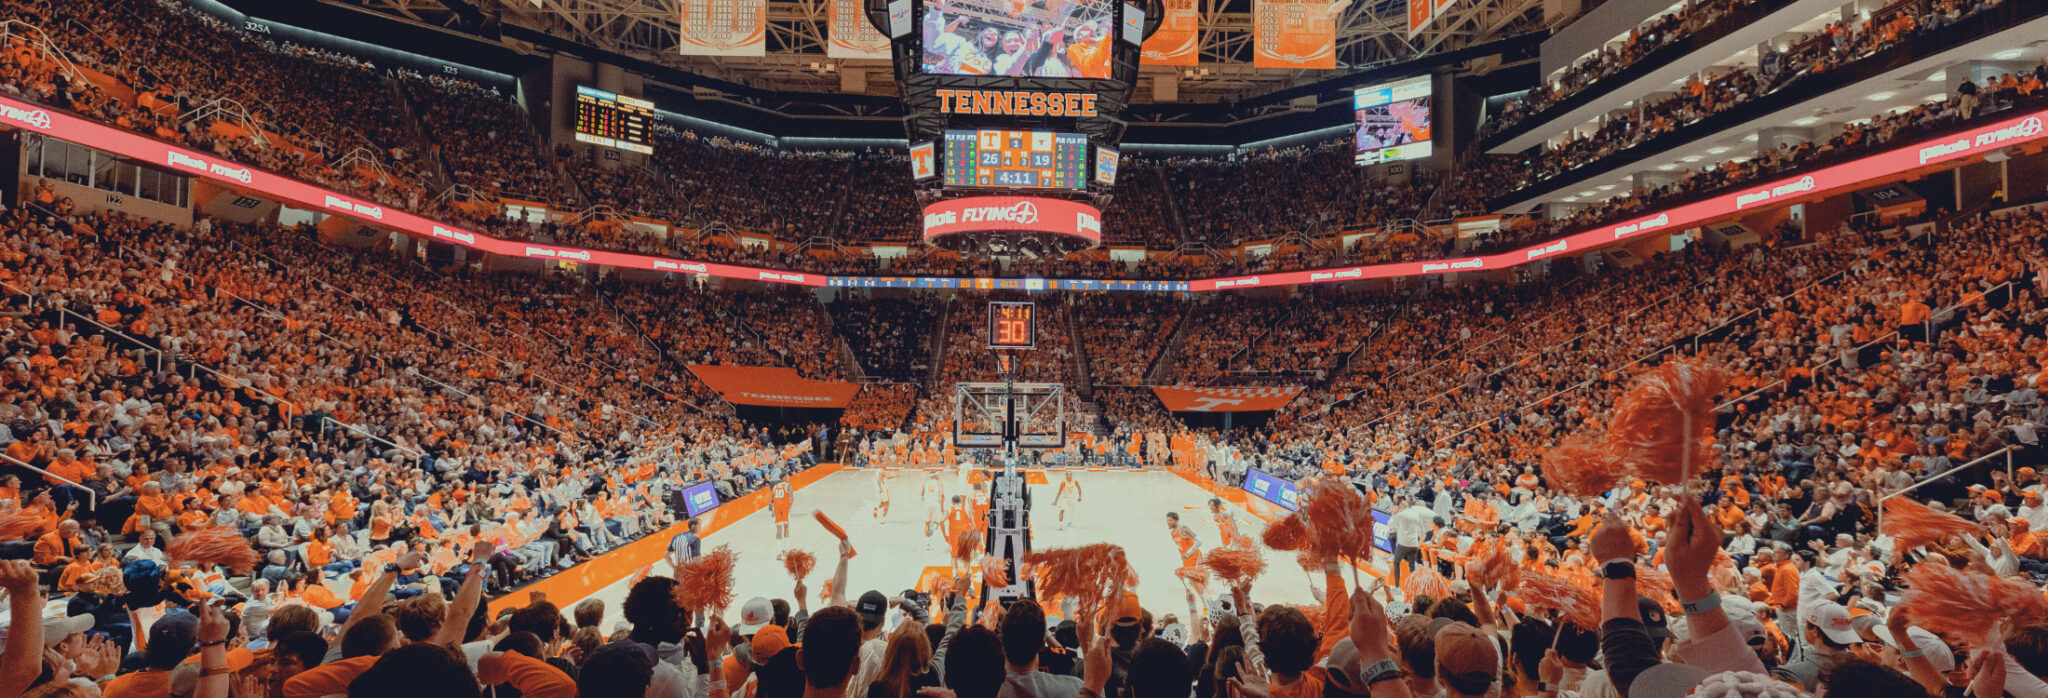 Basketball image from big orange tix